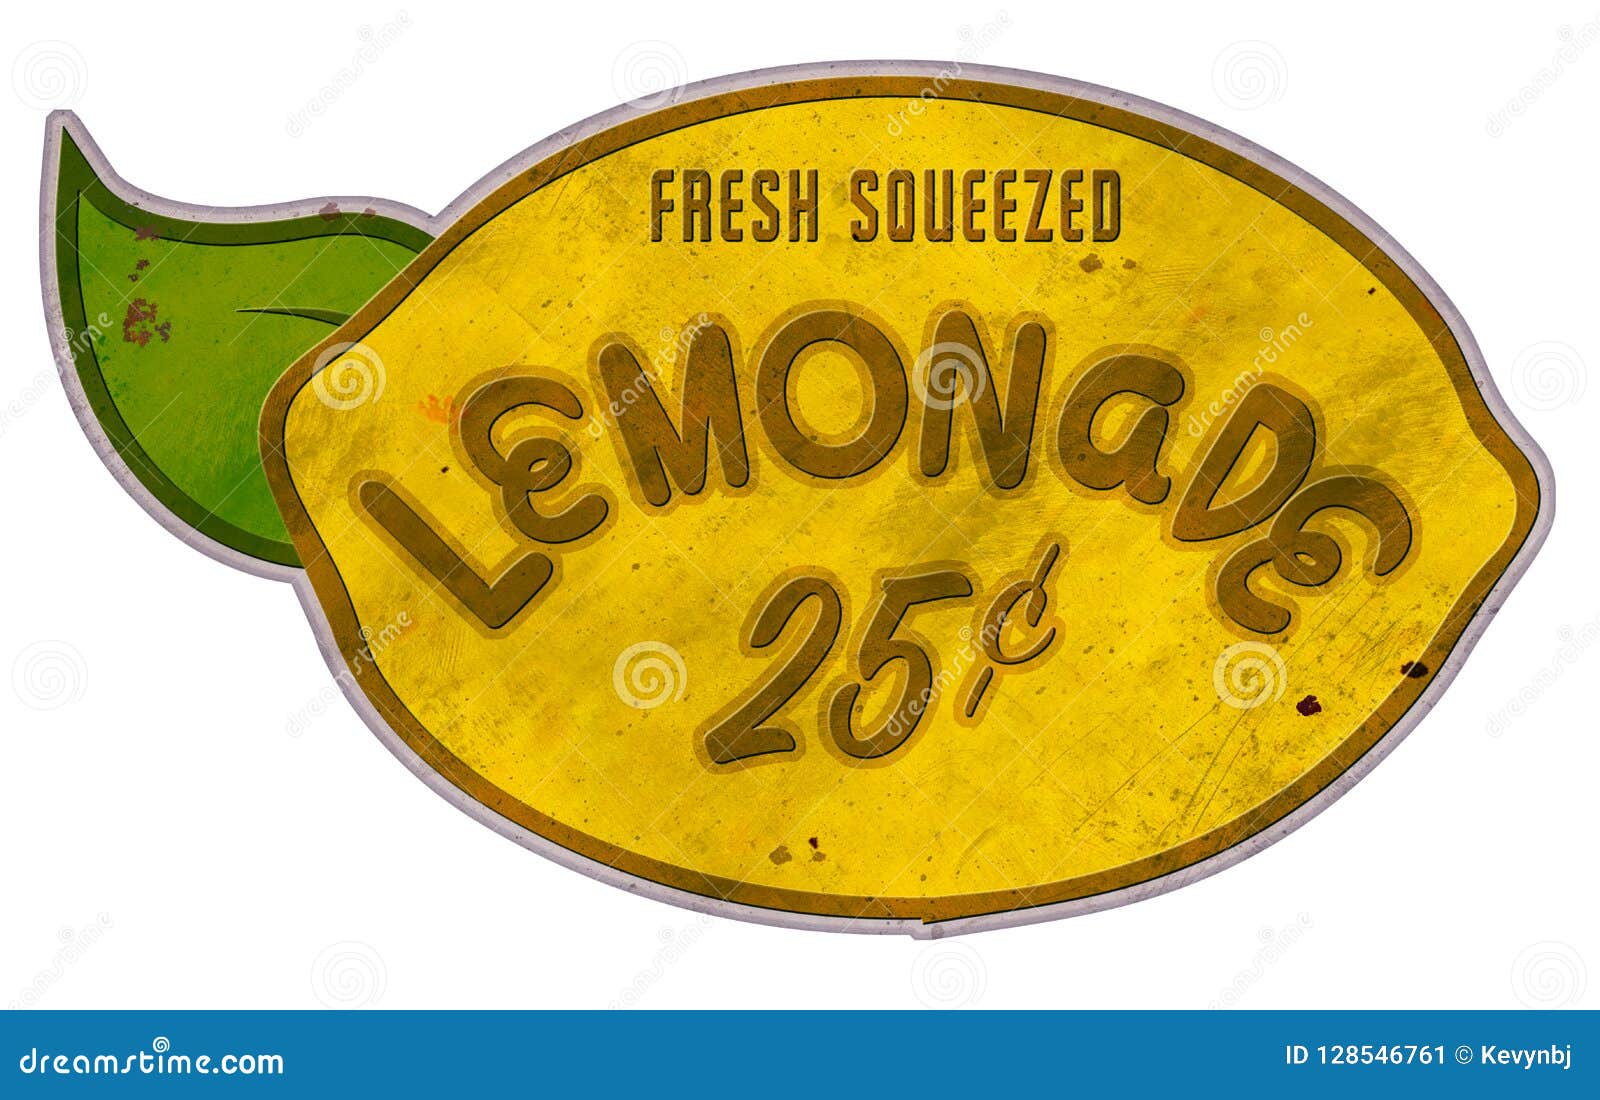 lemonade stand sign tin retro lemon  vintage